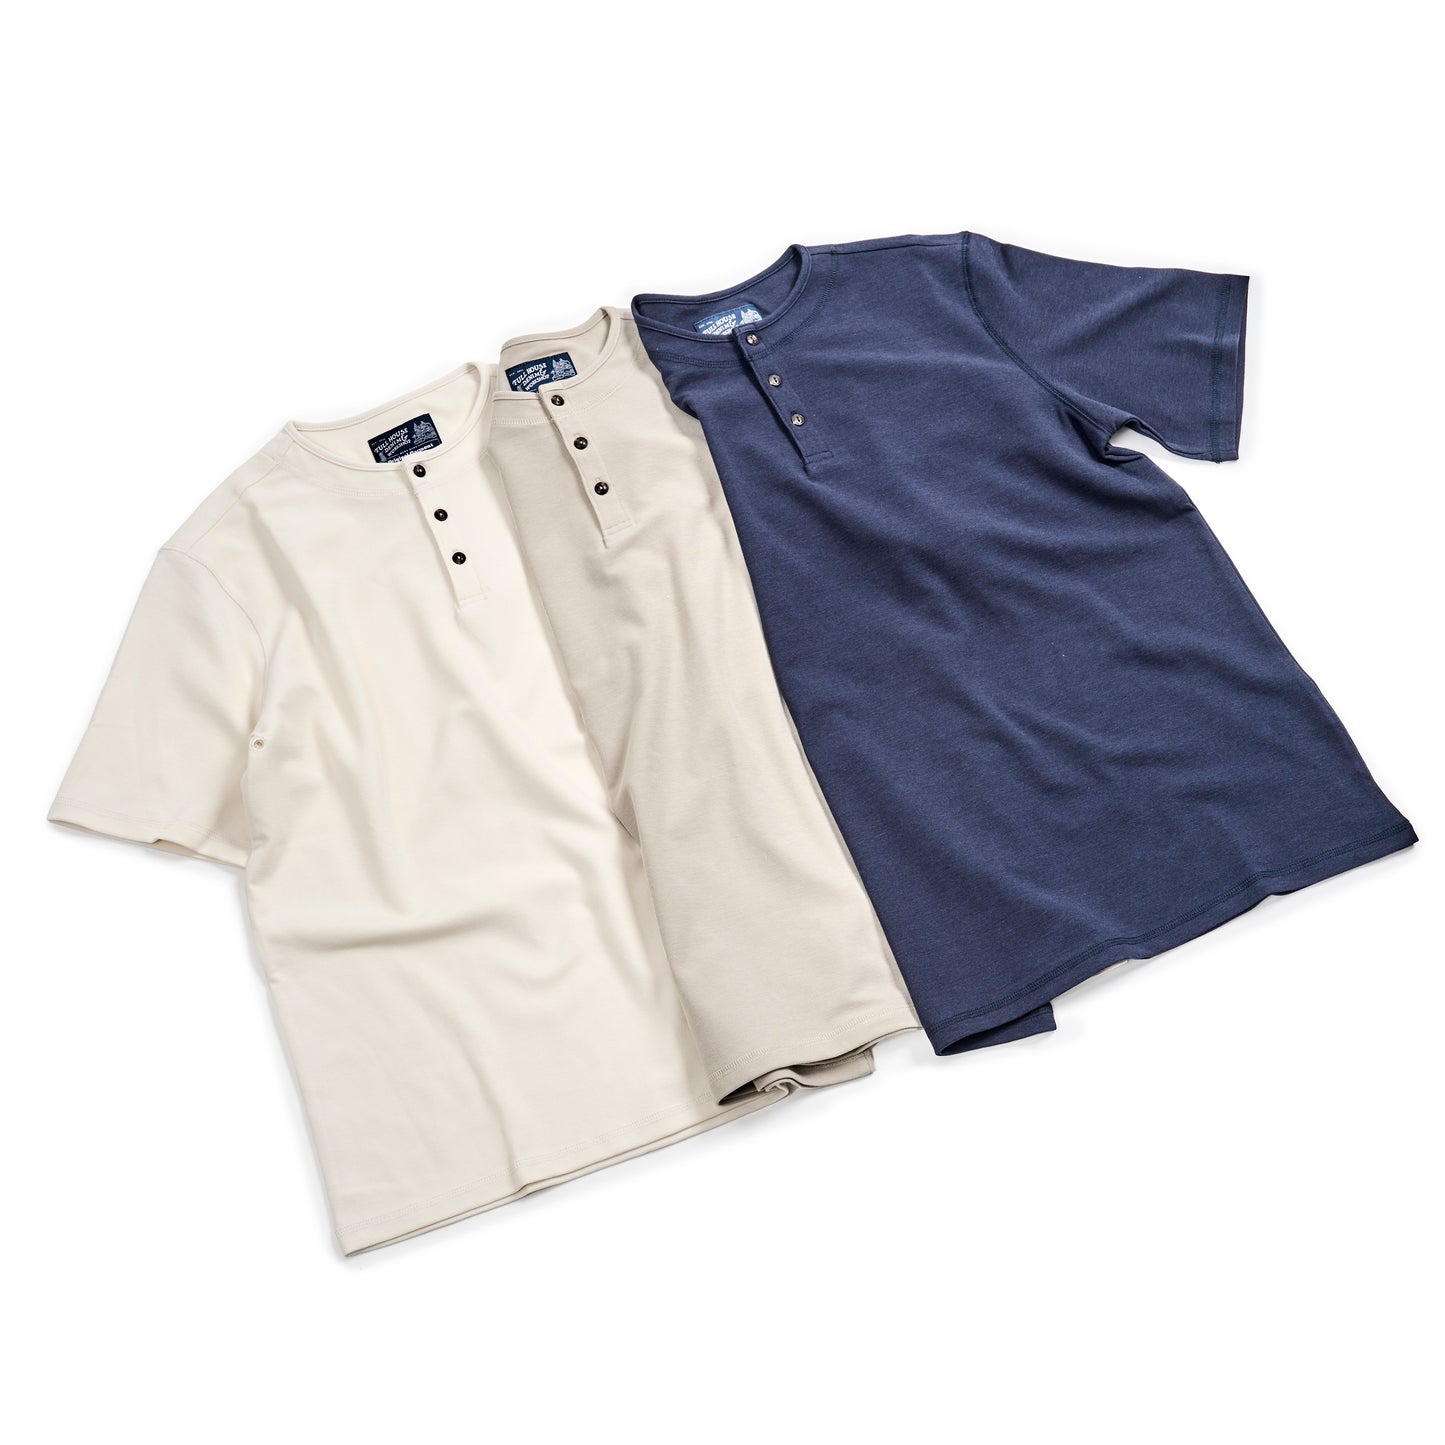 Washi Paper Yarn Blended Henley T-Shirt and Paper Yarn Blended High Density Cotton Henley Neck T-Shirt